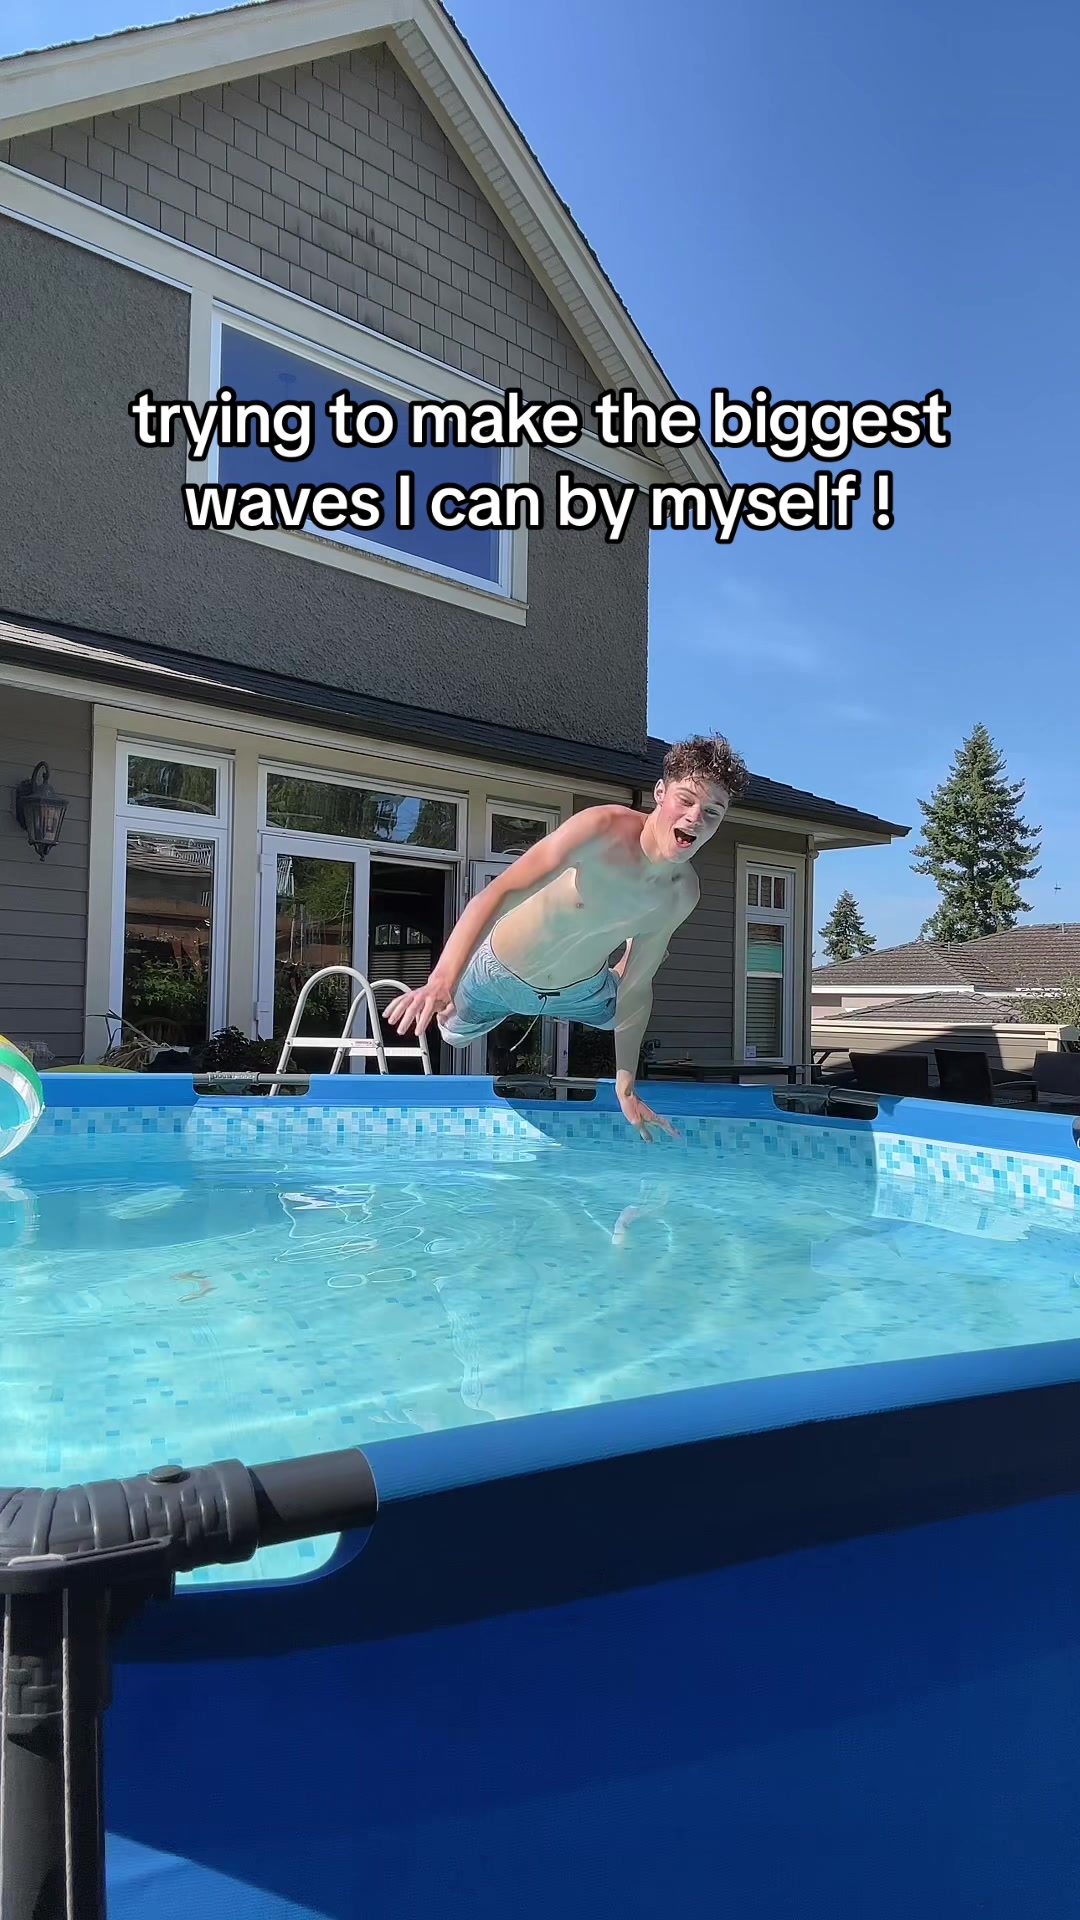 @adamsprivspam1 making extreme waves! #pool #summer #fyp #waves #poolfun  ♬ DC E...